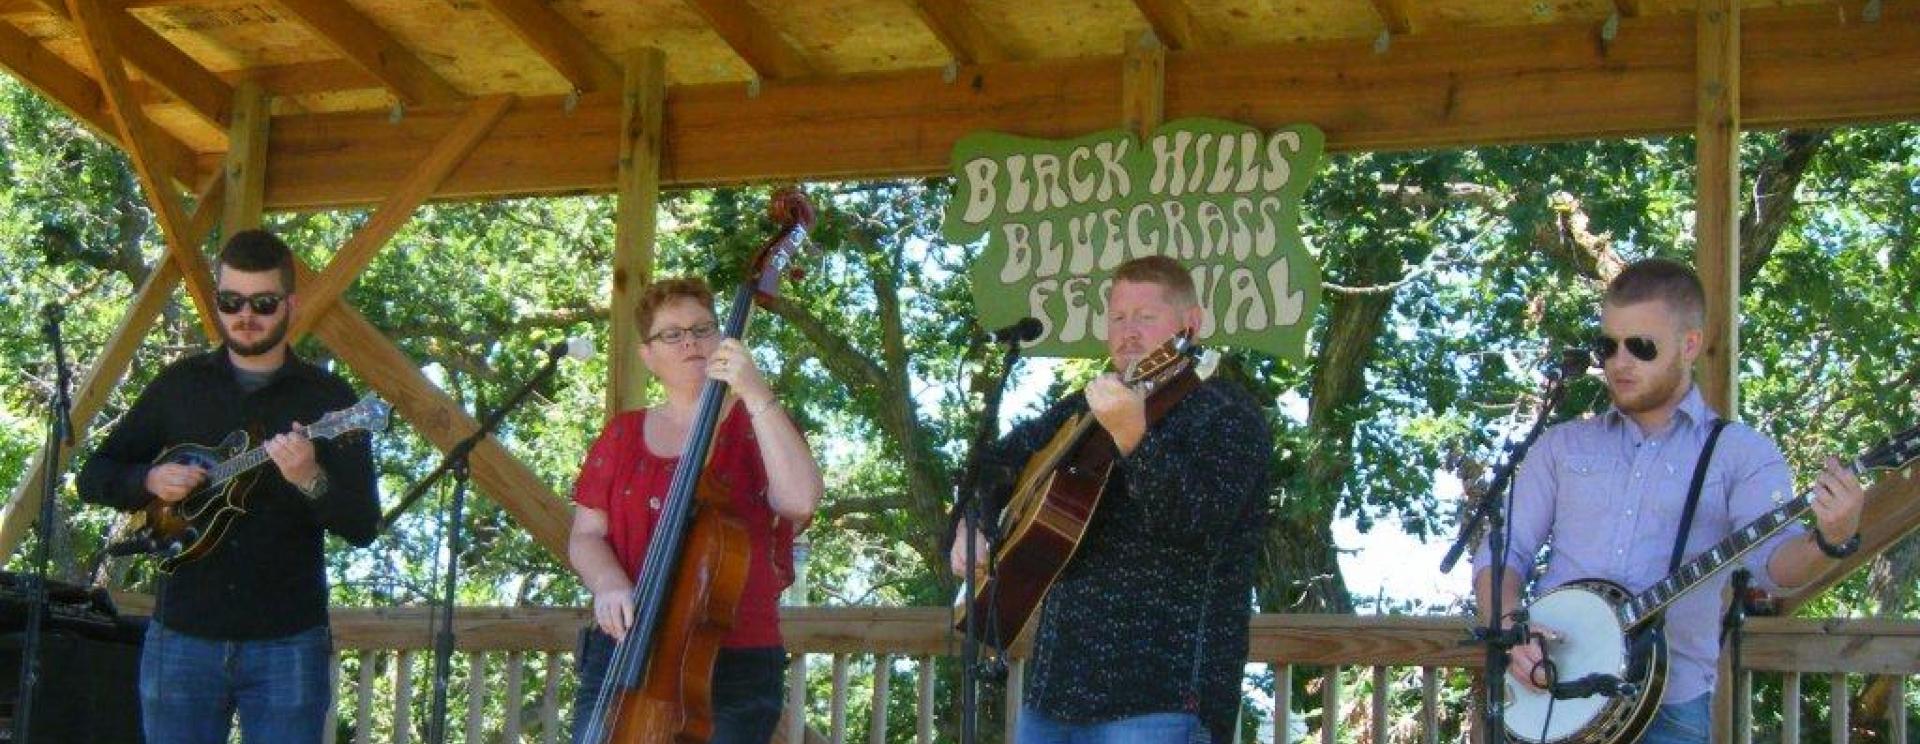 42nd Annual Black Hills Bluegrass Festival